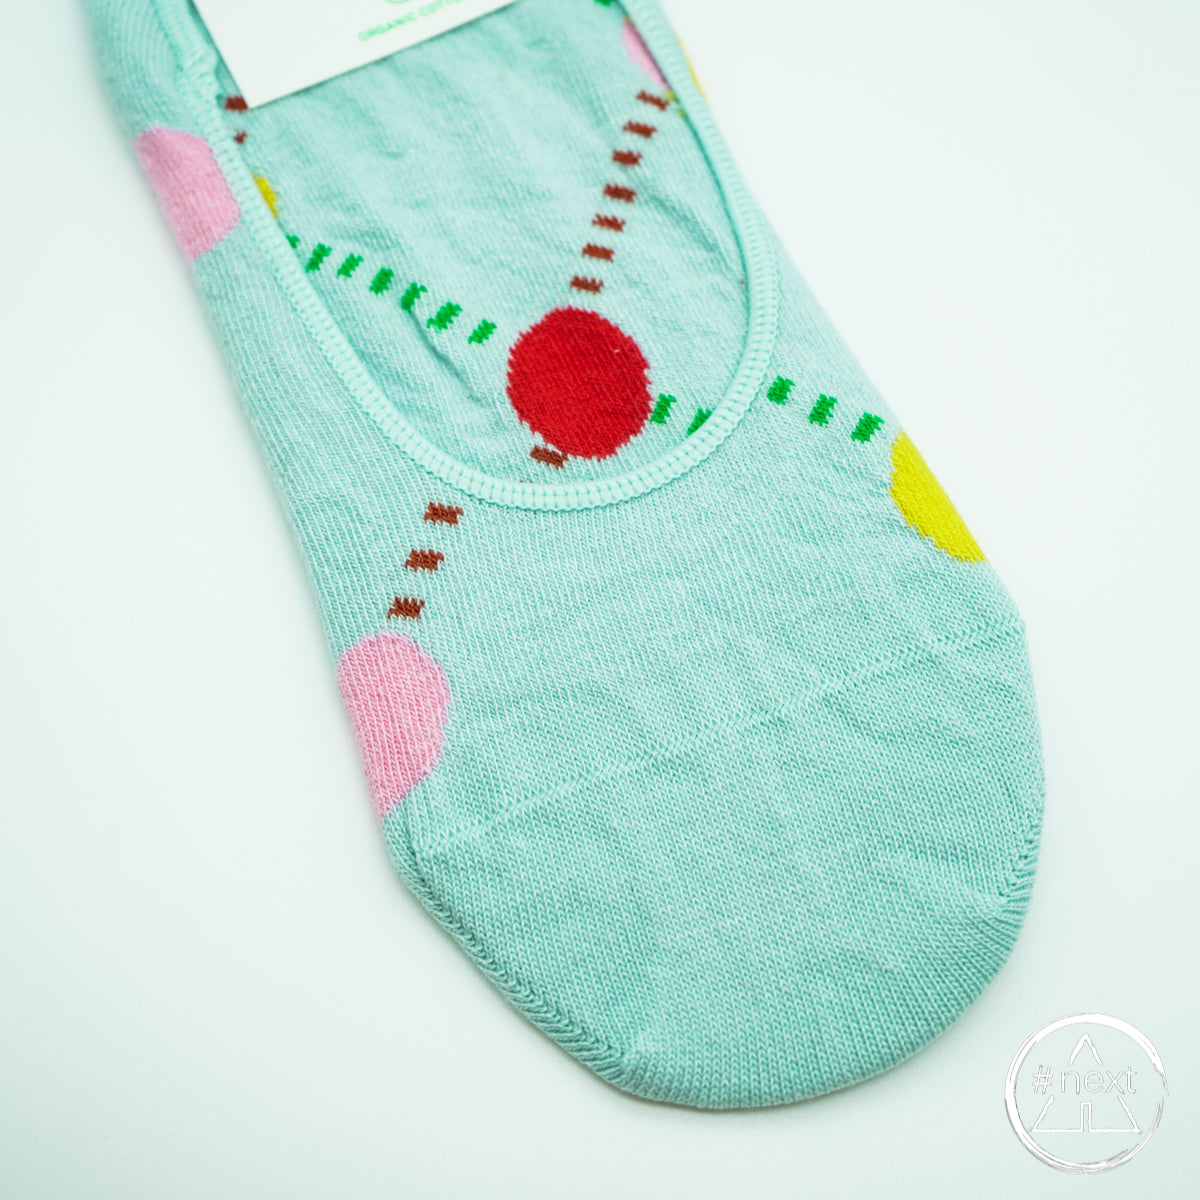 Happy Socks - Calza salvapiede - Liner - Dot 1/2 - organic cotton - ANDY #NEXT